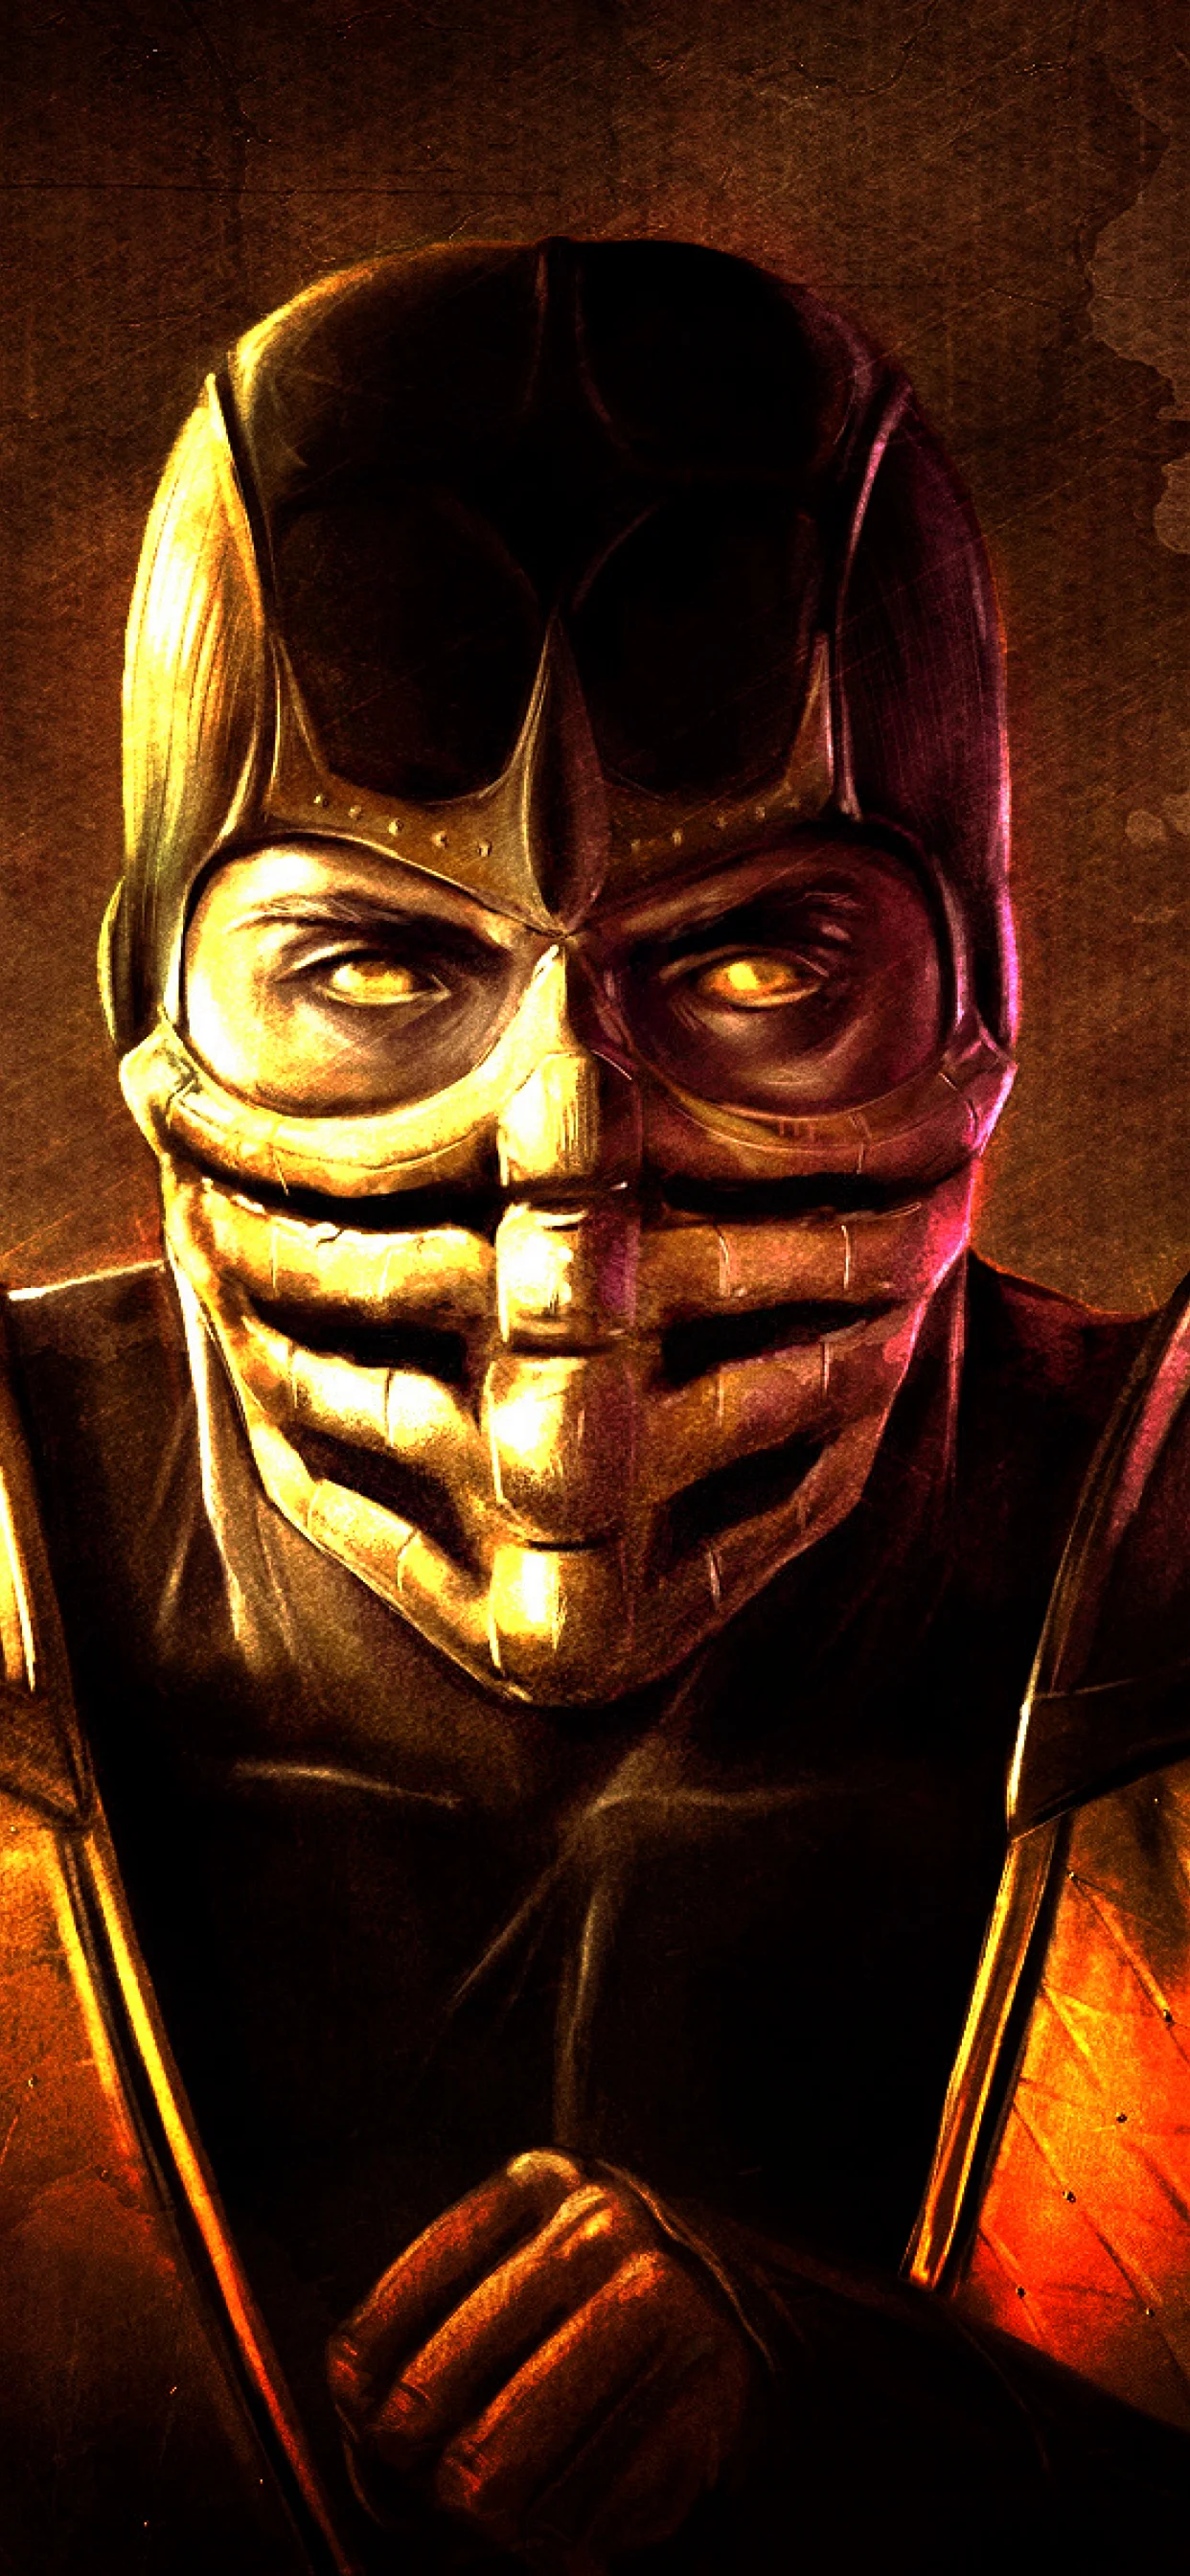 Scorpion Mortal Kombat Wallpaper for iPhone 11 Pro Max